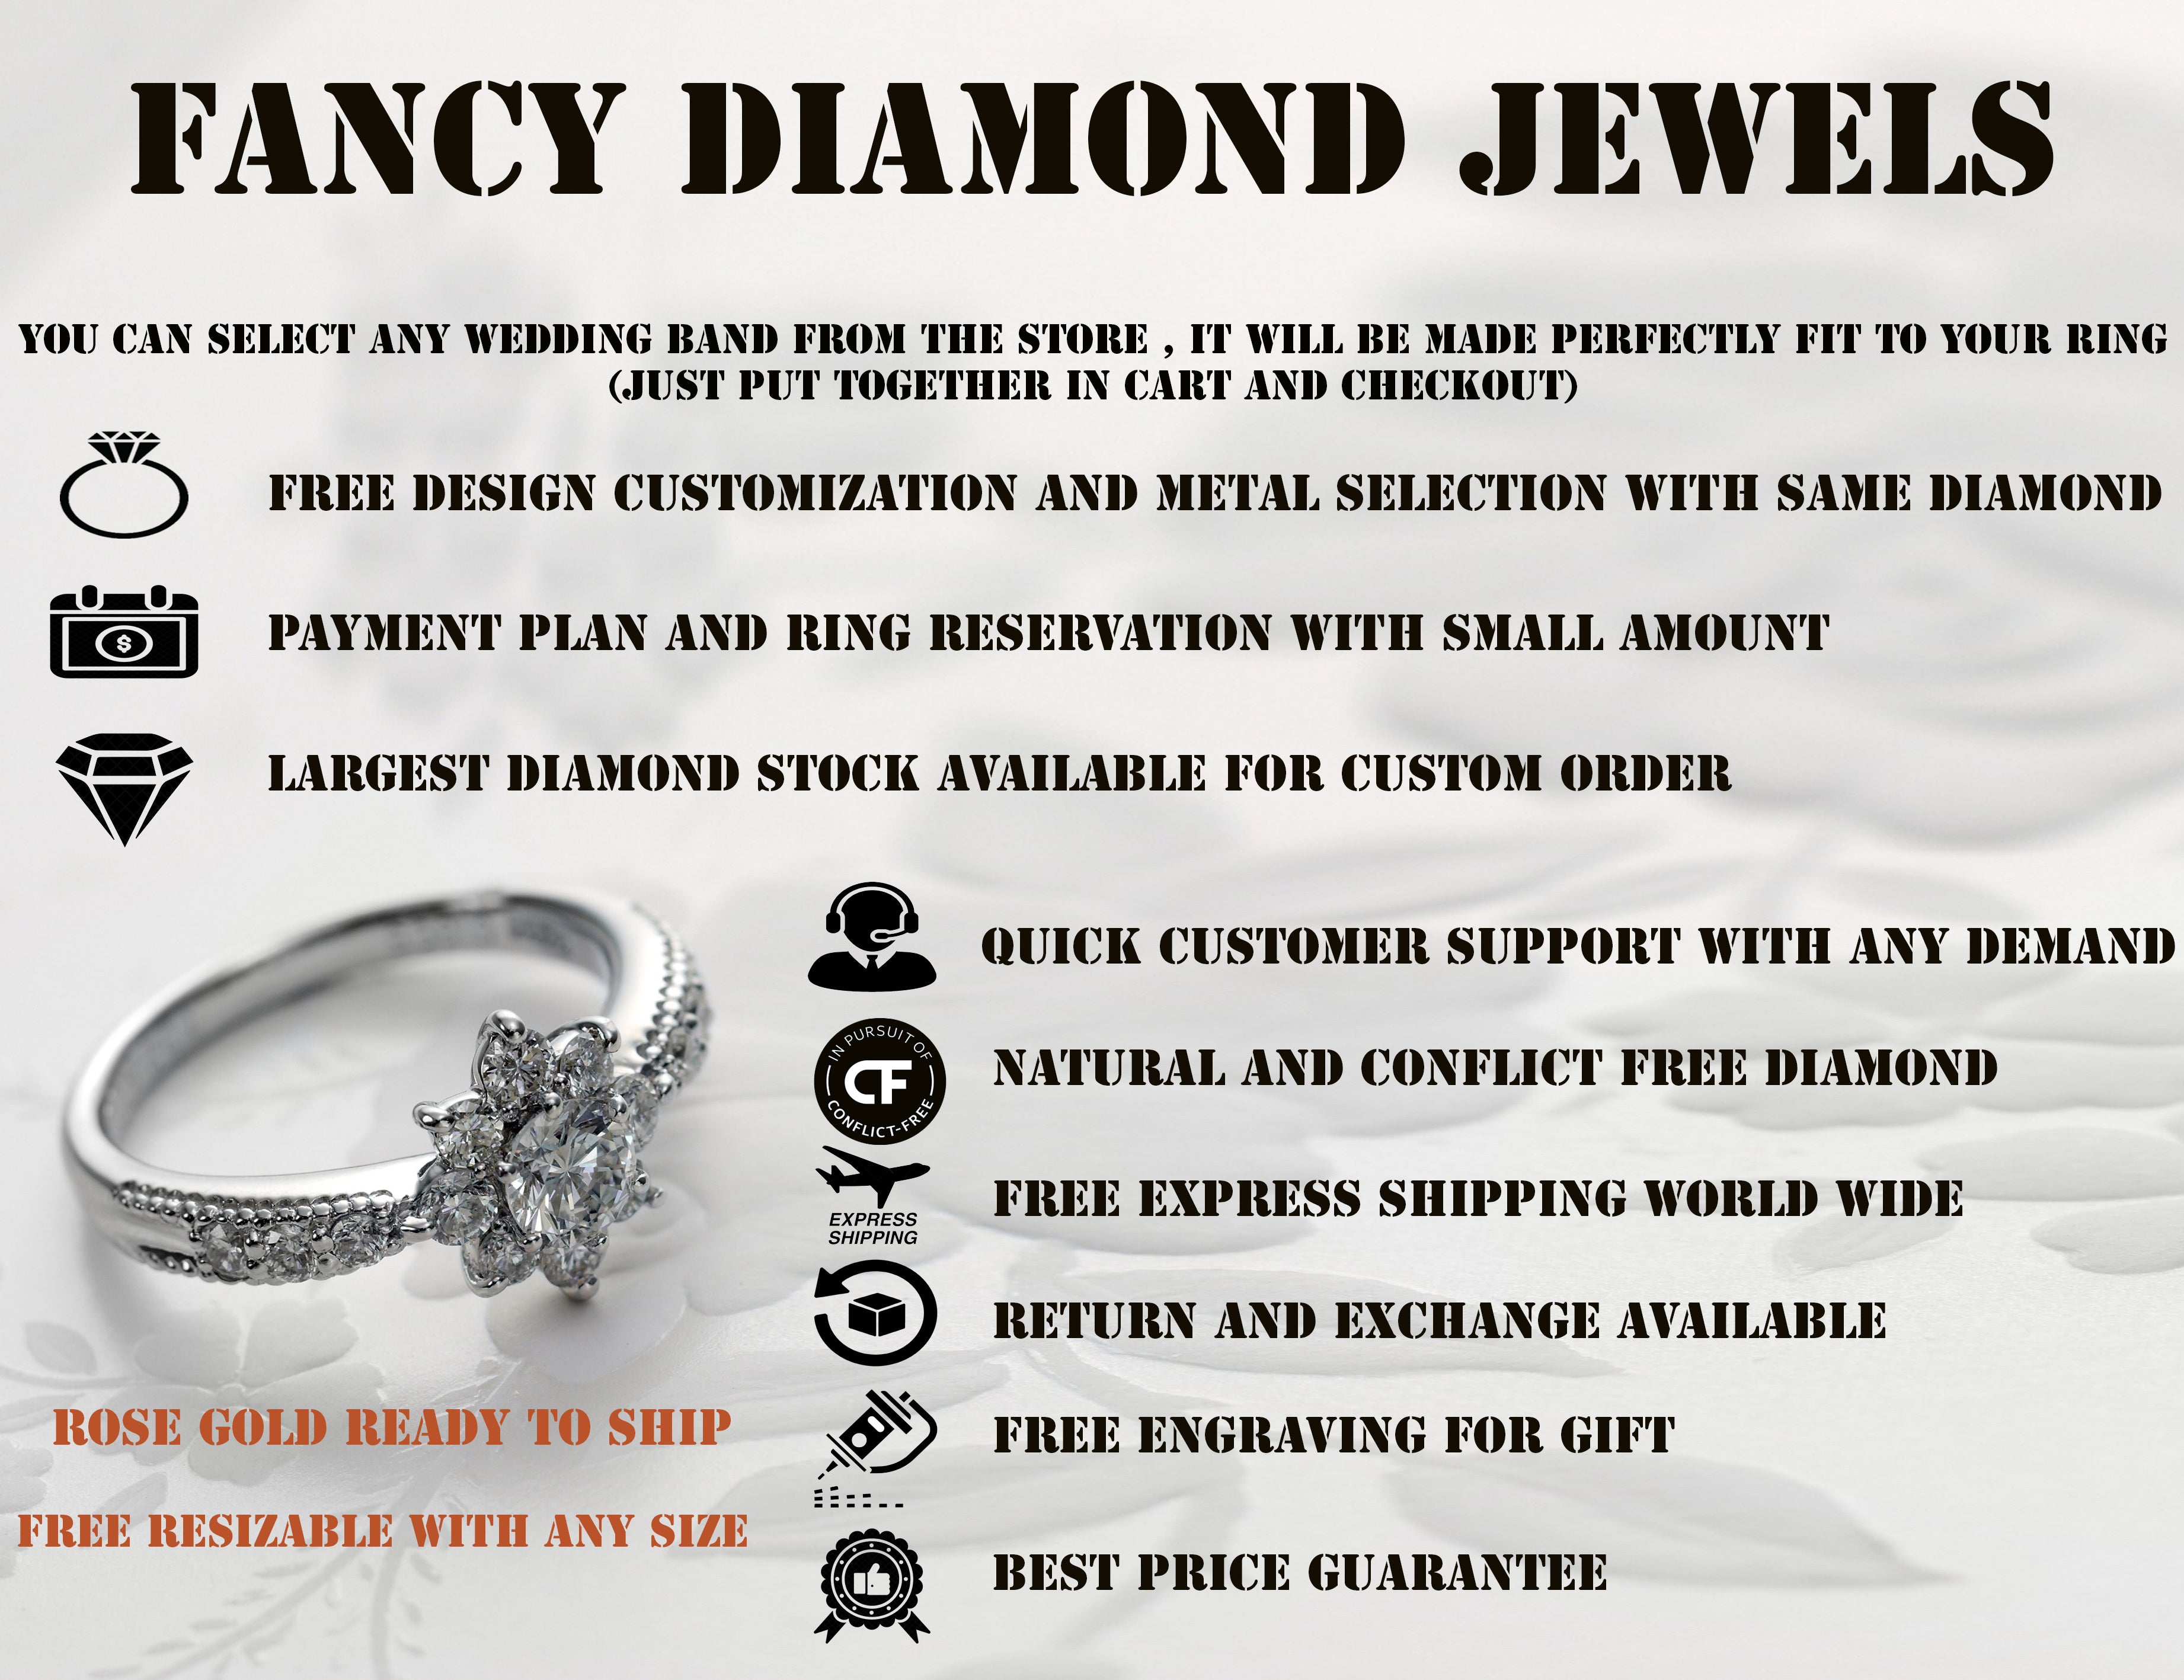 Pentagon Cut Salt And Pepper Diamond Ring 0.98 Ct 7.00 MM Pentagon Diamond Ring 14K Rose Gold Silver Engagement Ring Gift For Her QL1222